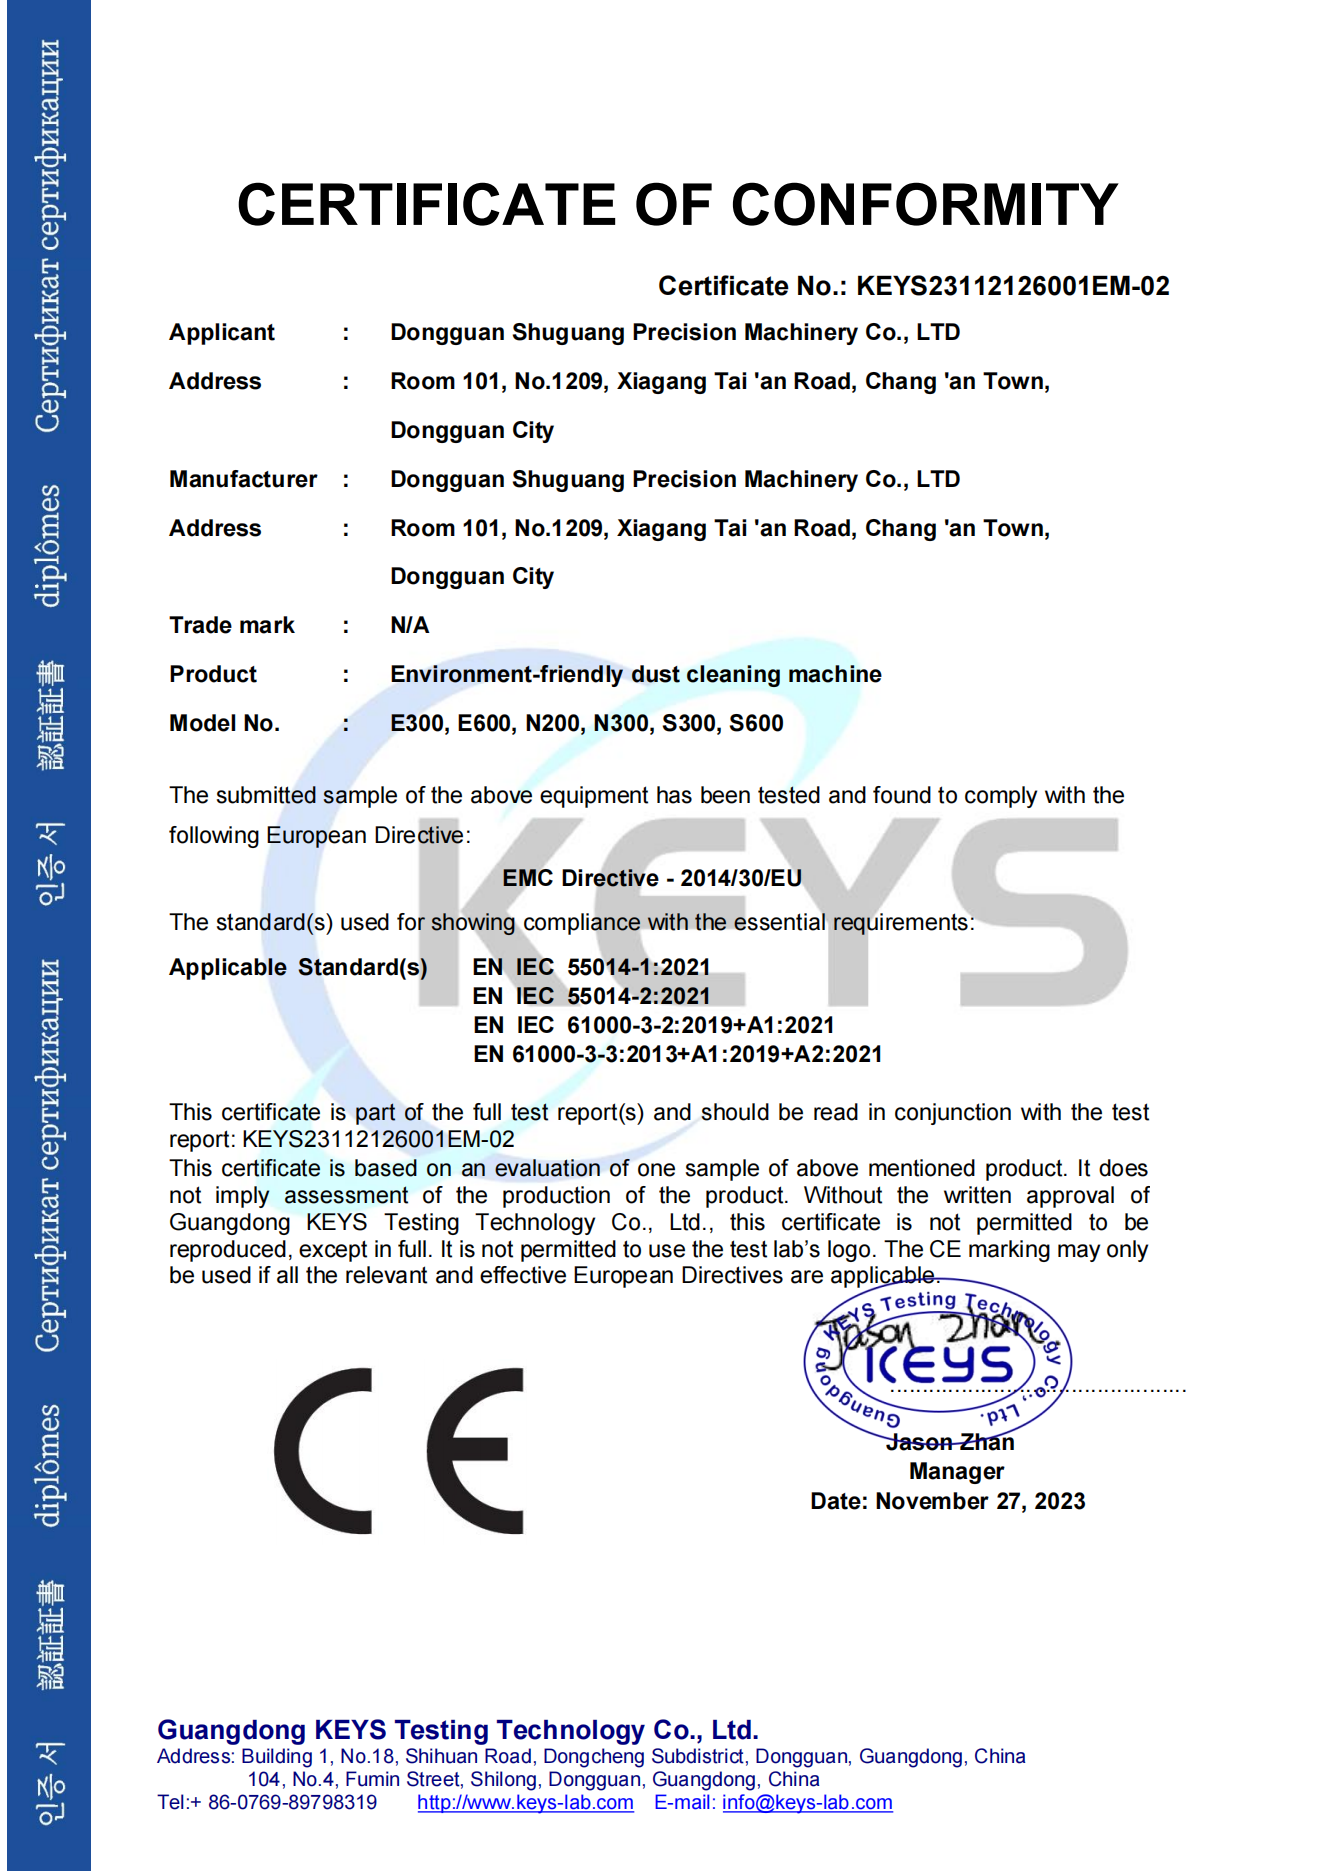 CE-EMC认证